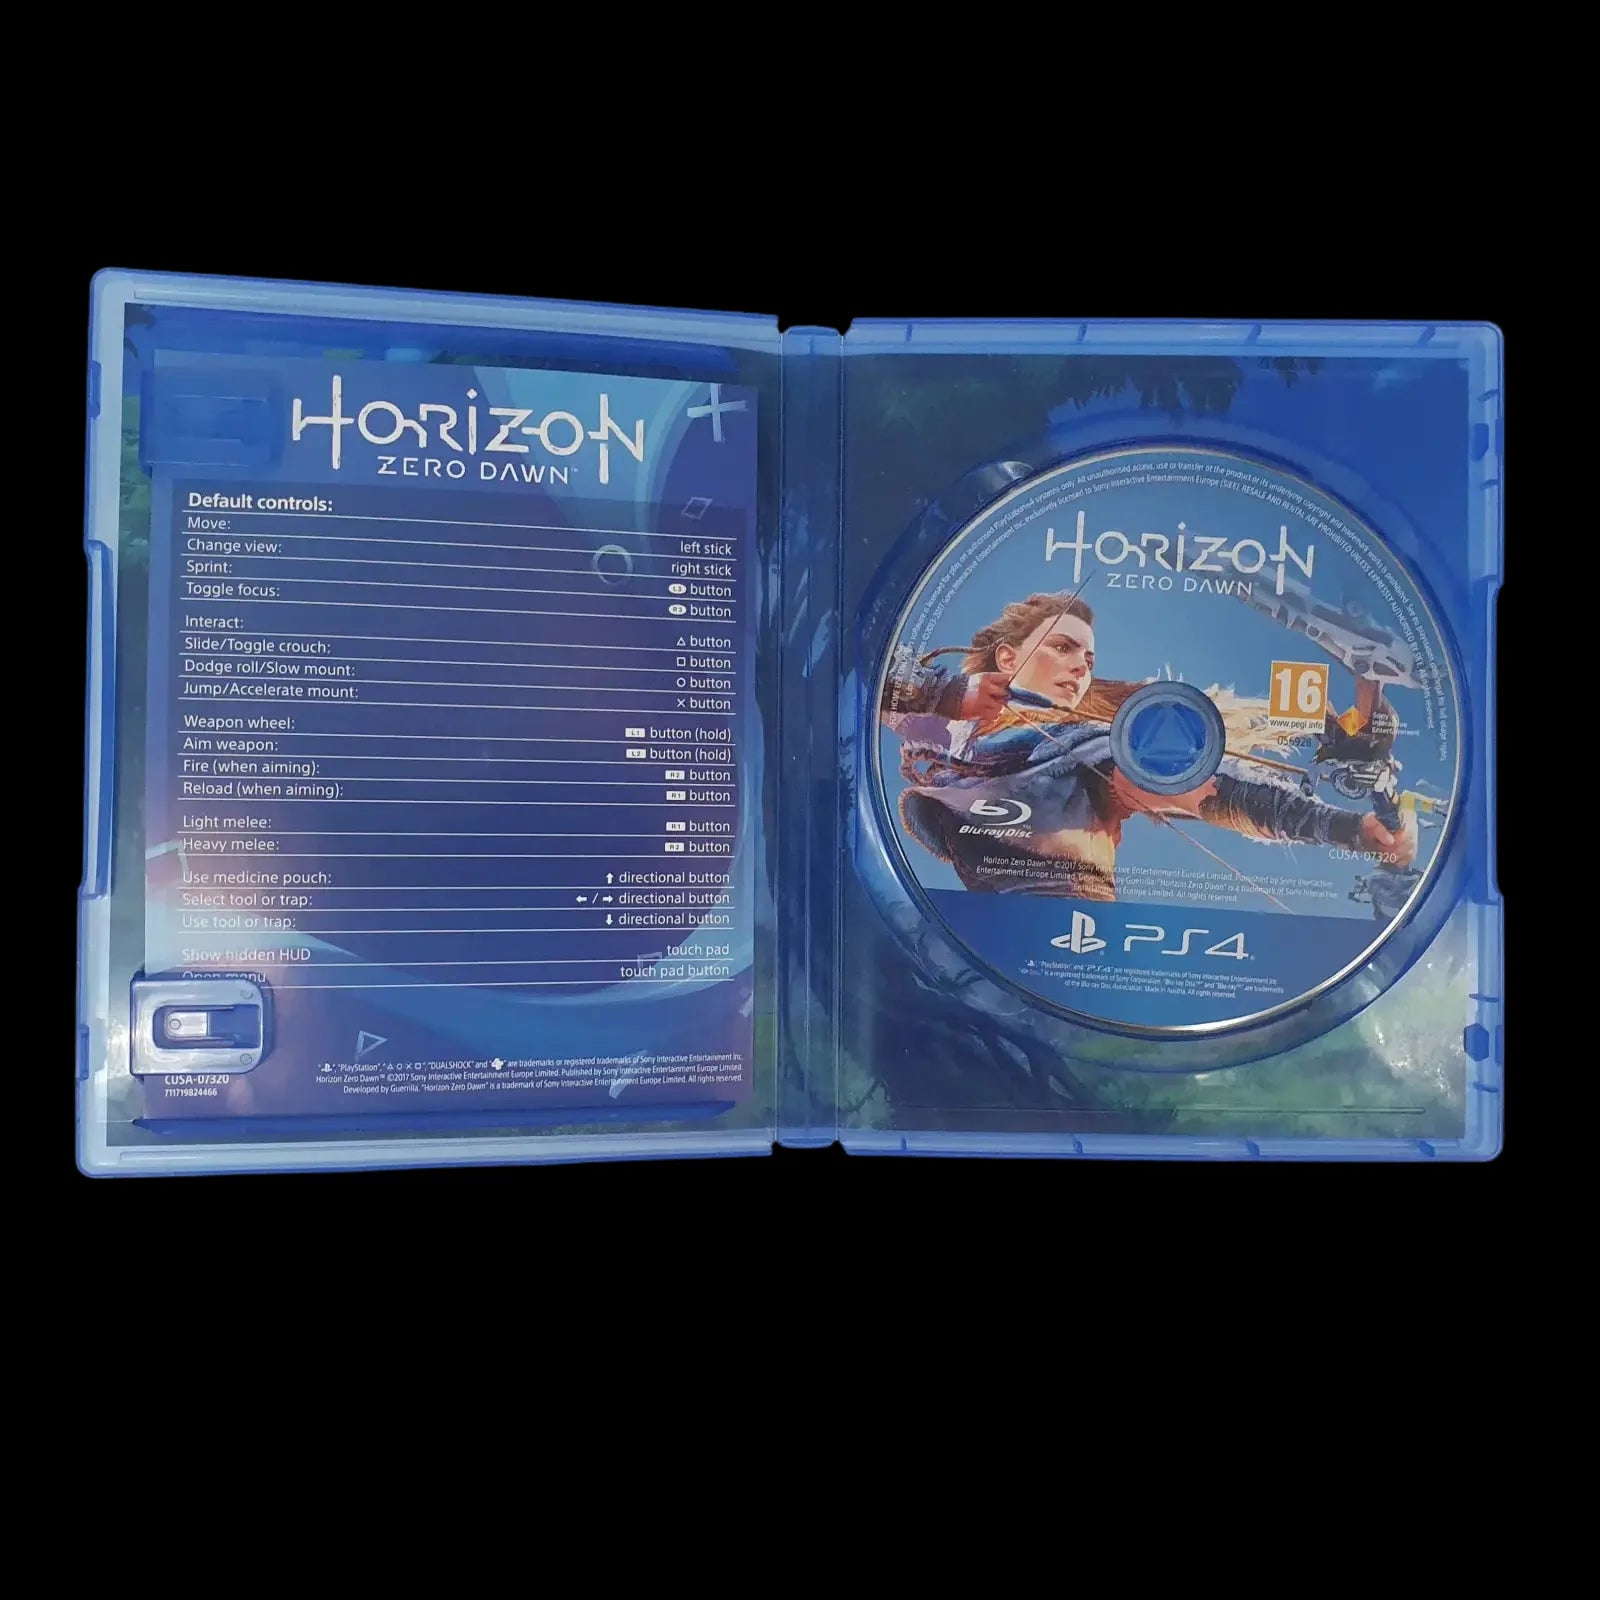 Horizon Zero Dawn Sony Playstation 4 Ps4 Guerrilla 2017 Cib